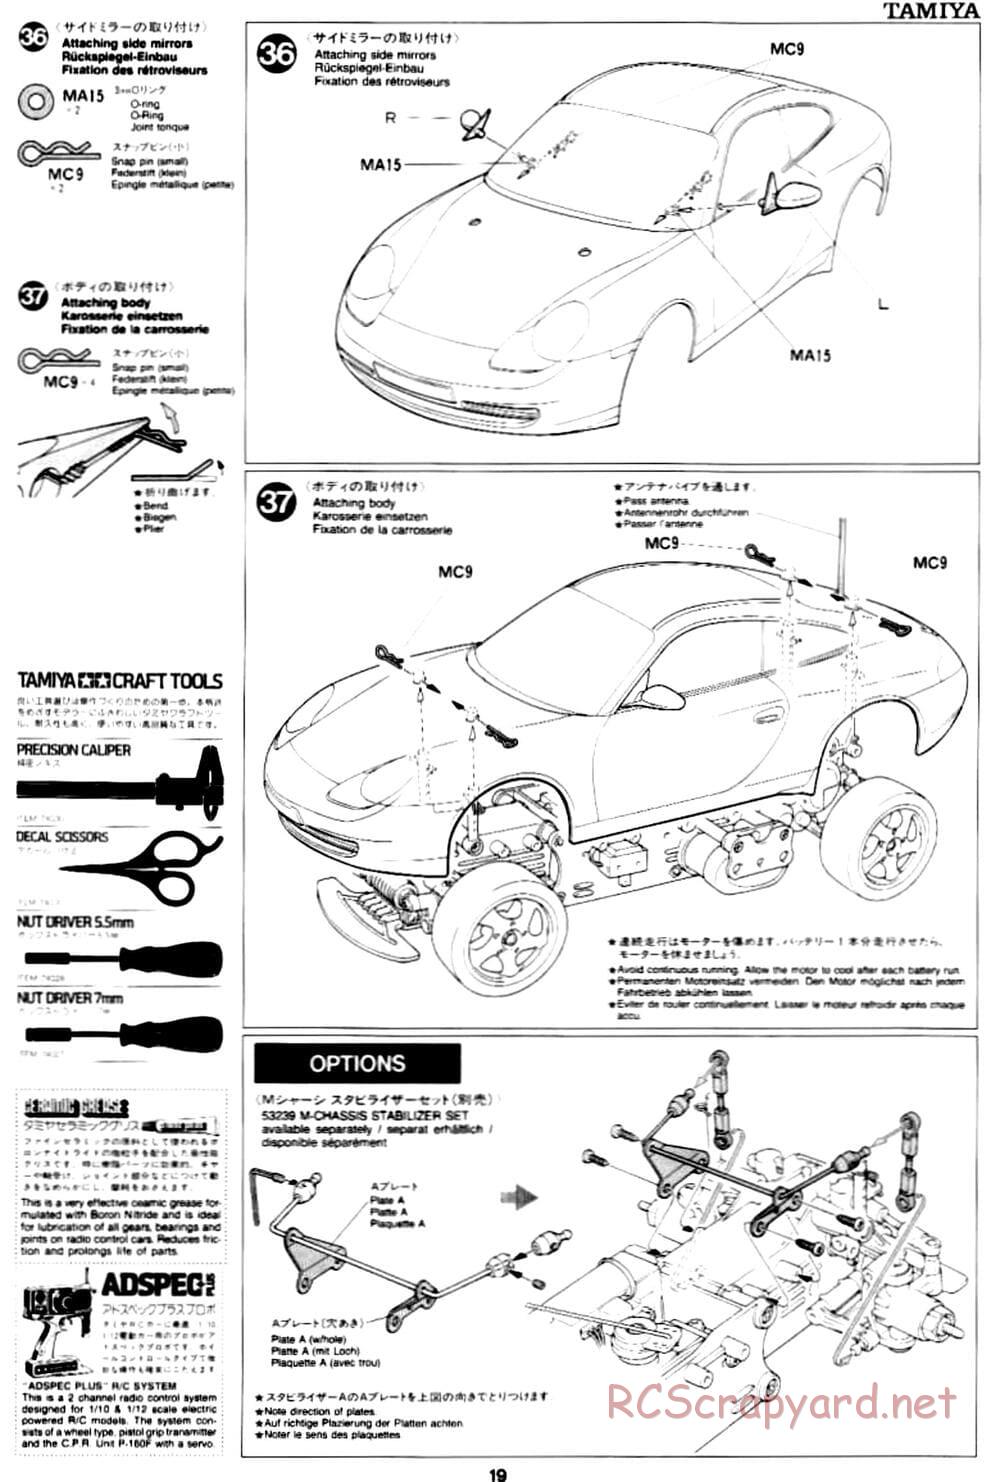 Tamiya - Porsche 911 Carrera - M02L Chassis - Manual - Page 19